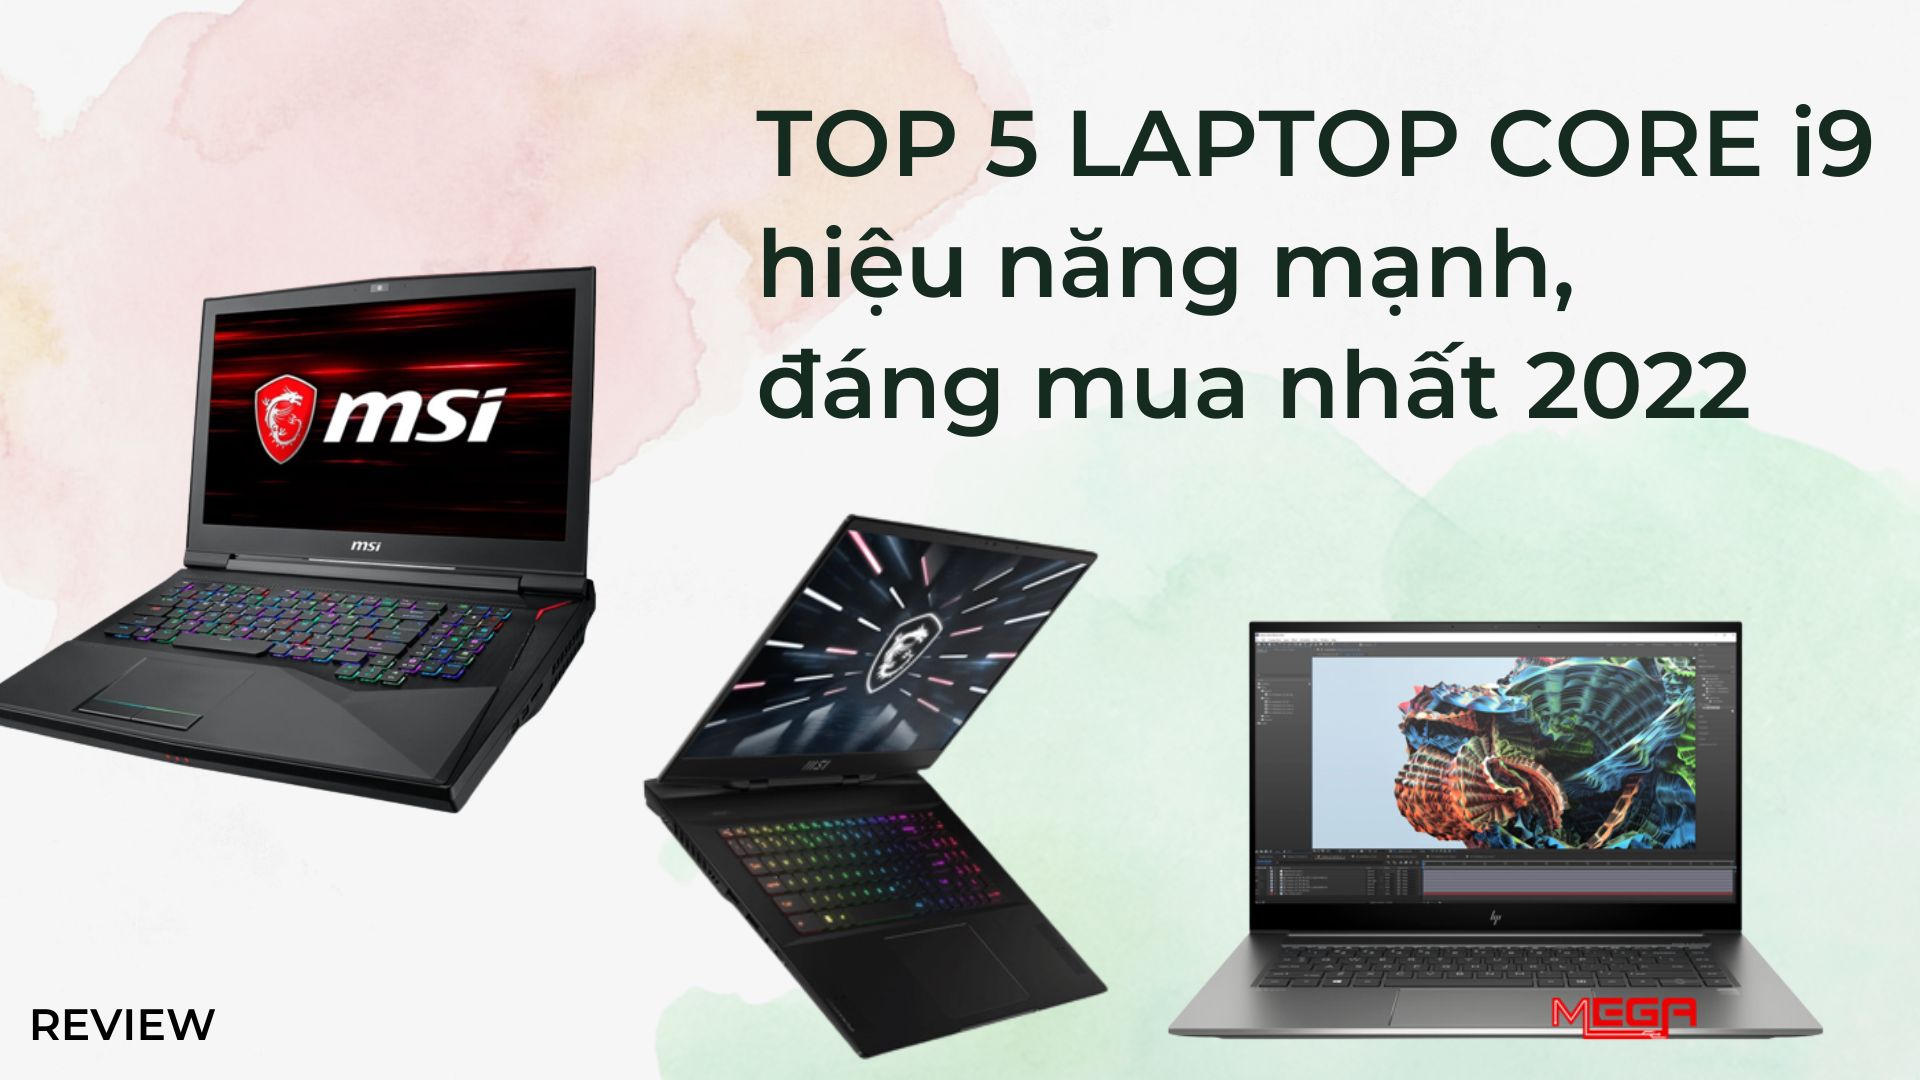 Top laptop core i9